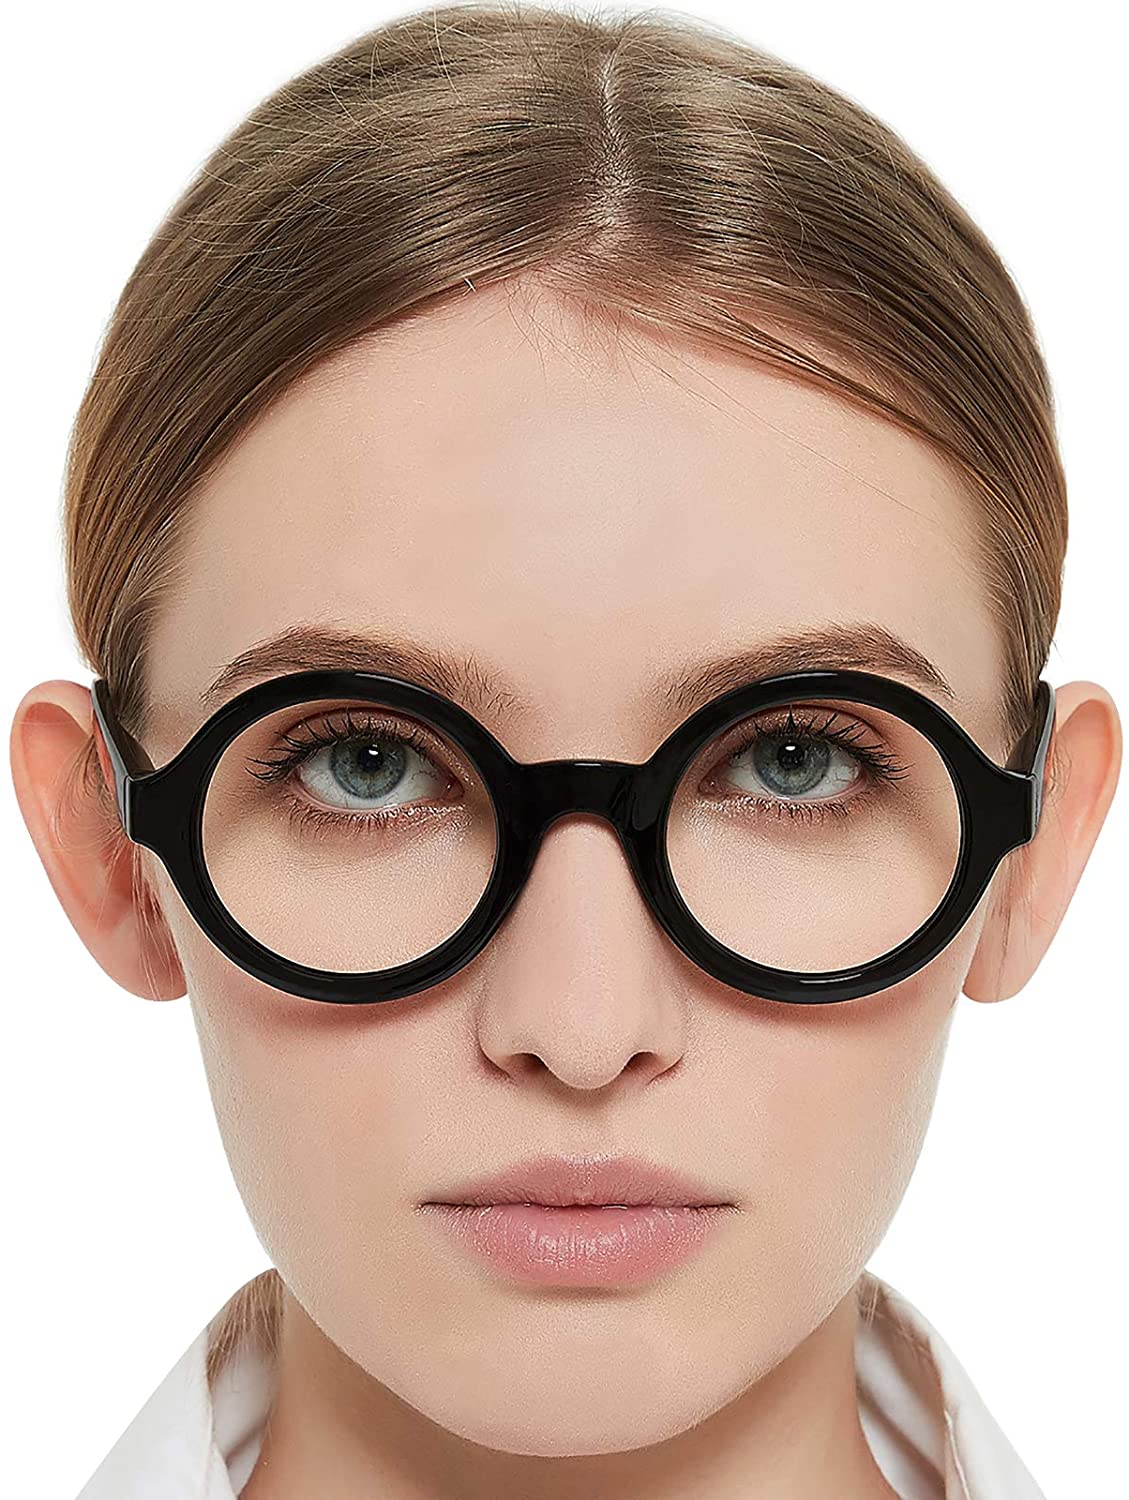 OCCI CHIARI Reading Glasses Women's Reader Clear Frame